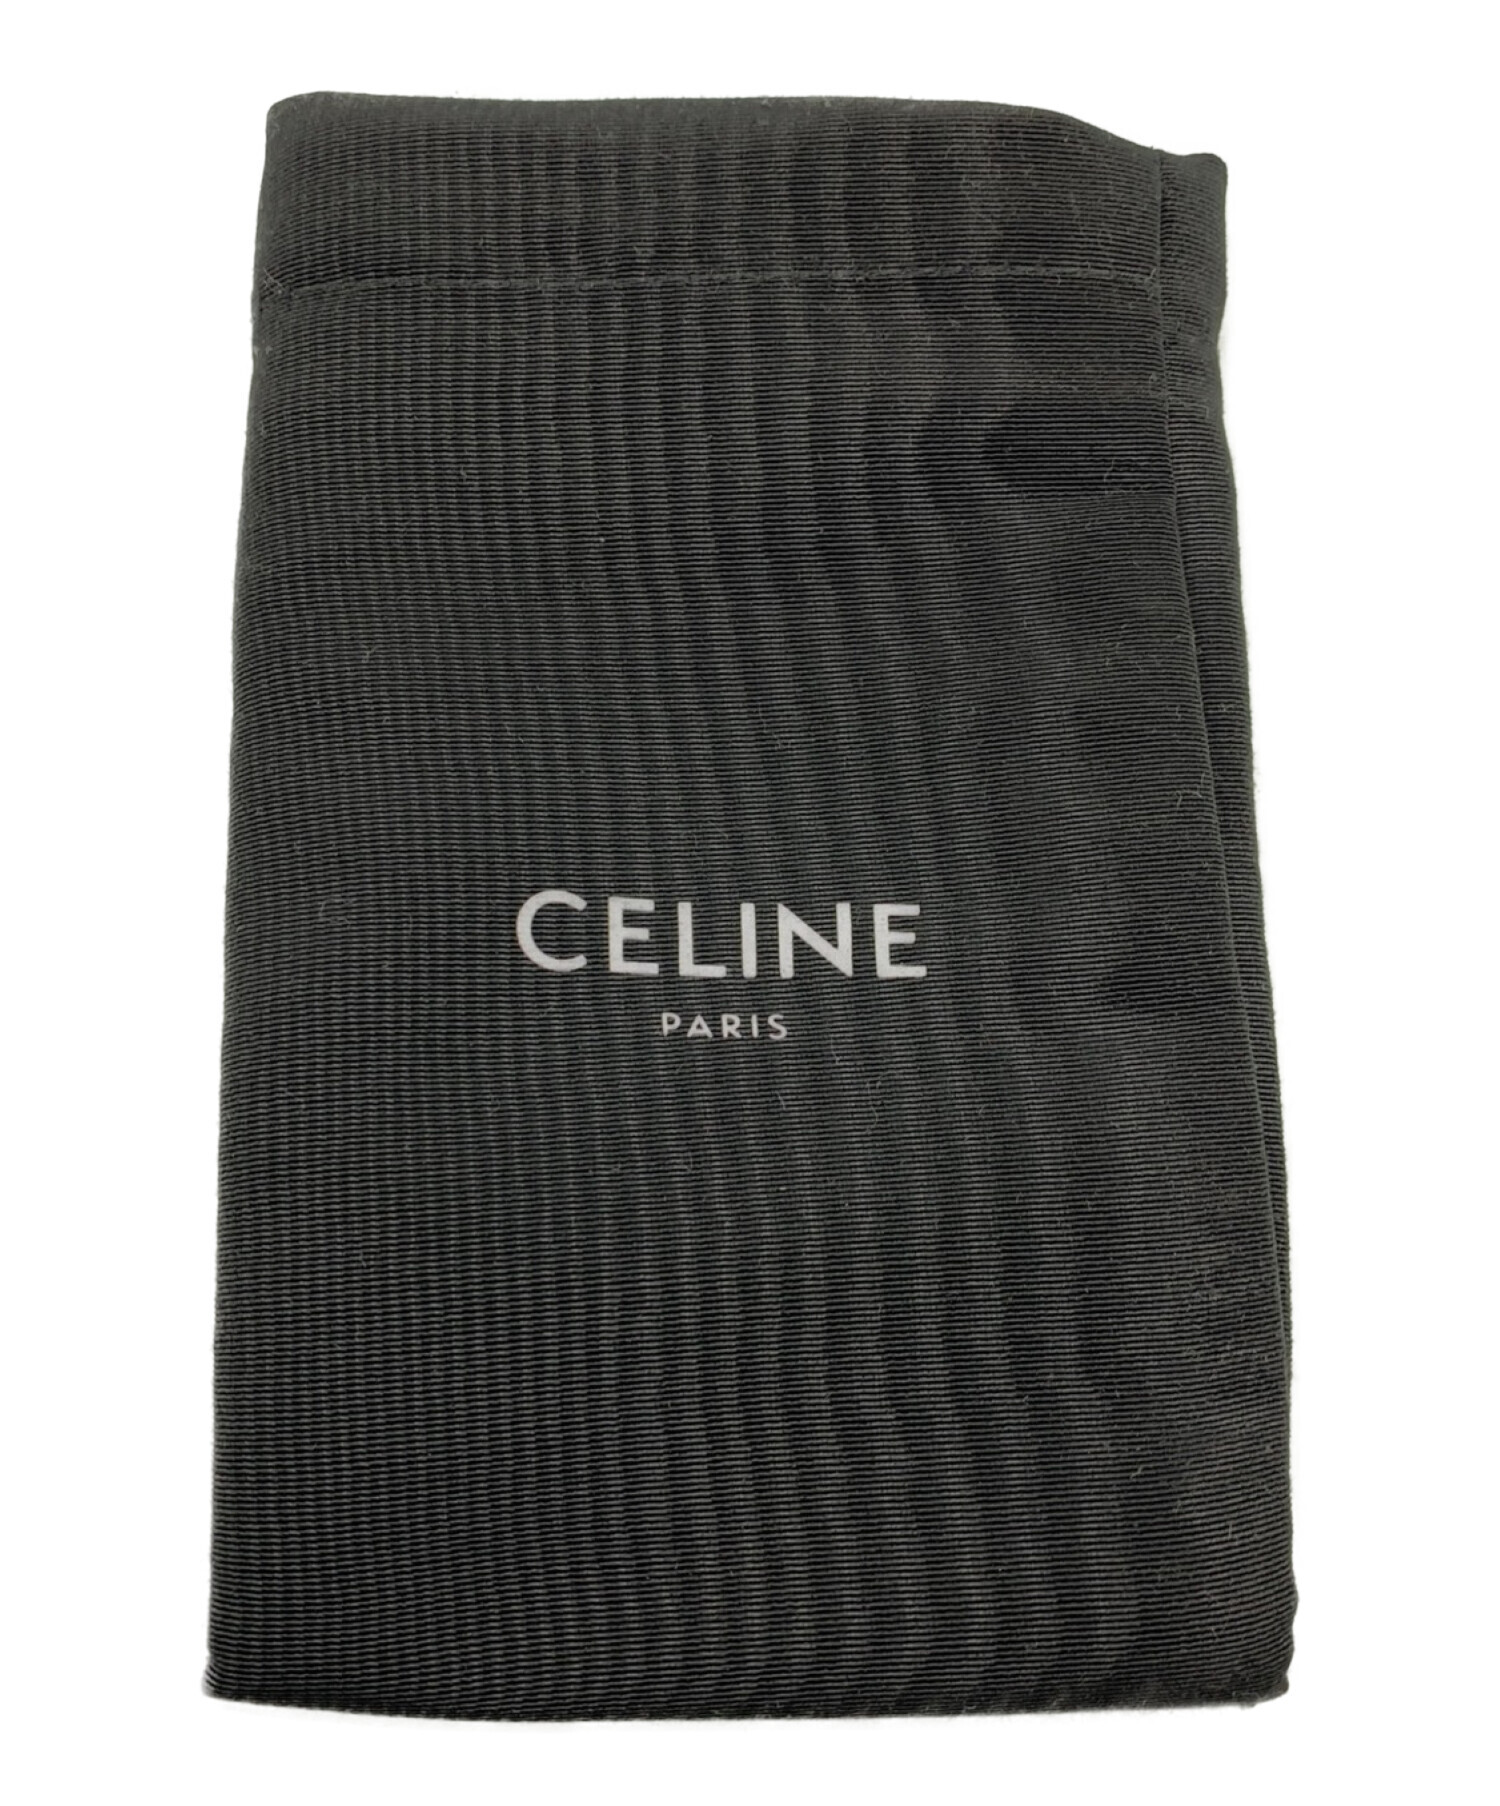 CELINE (セリーヌ) カードケース ブラック